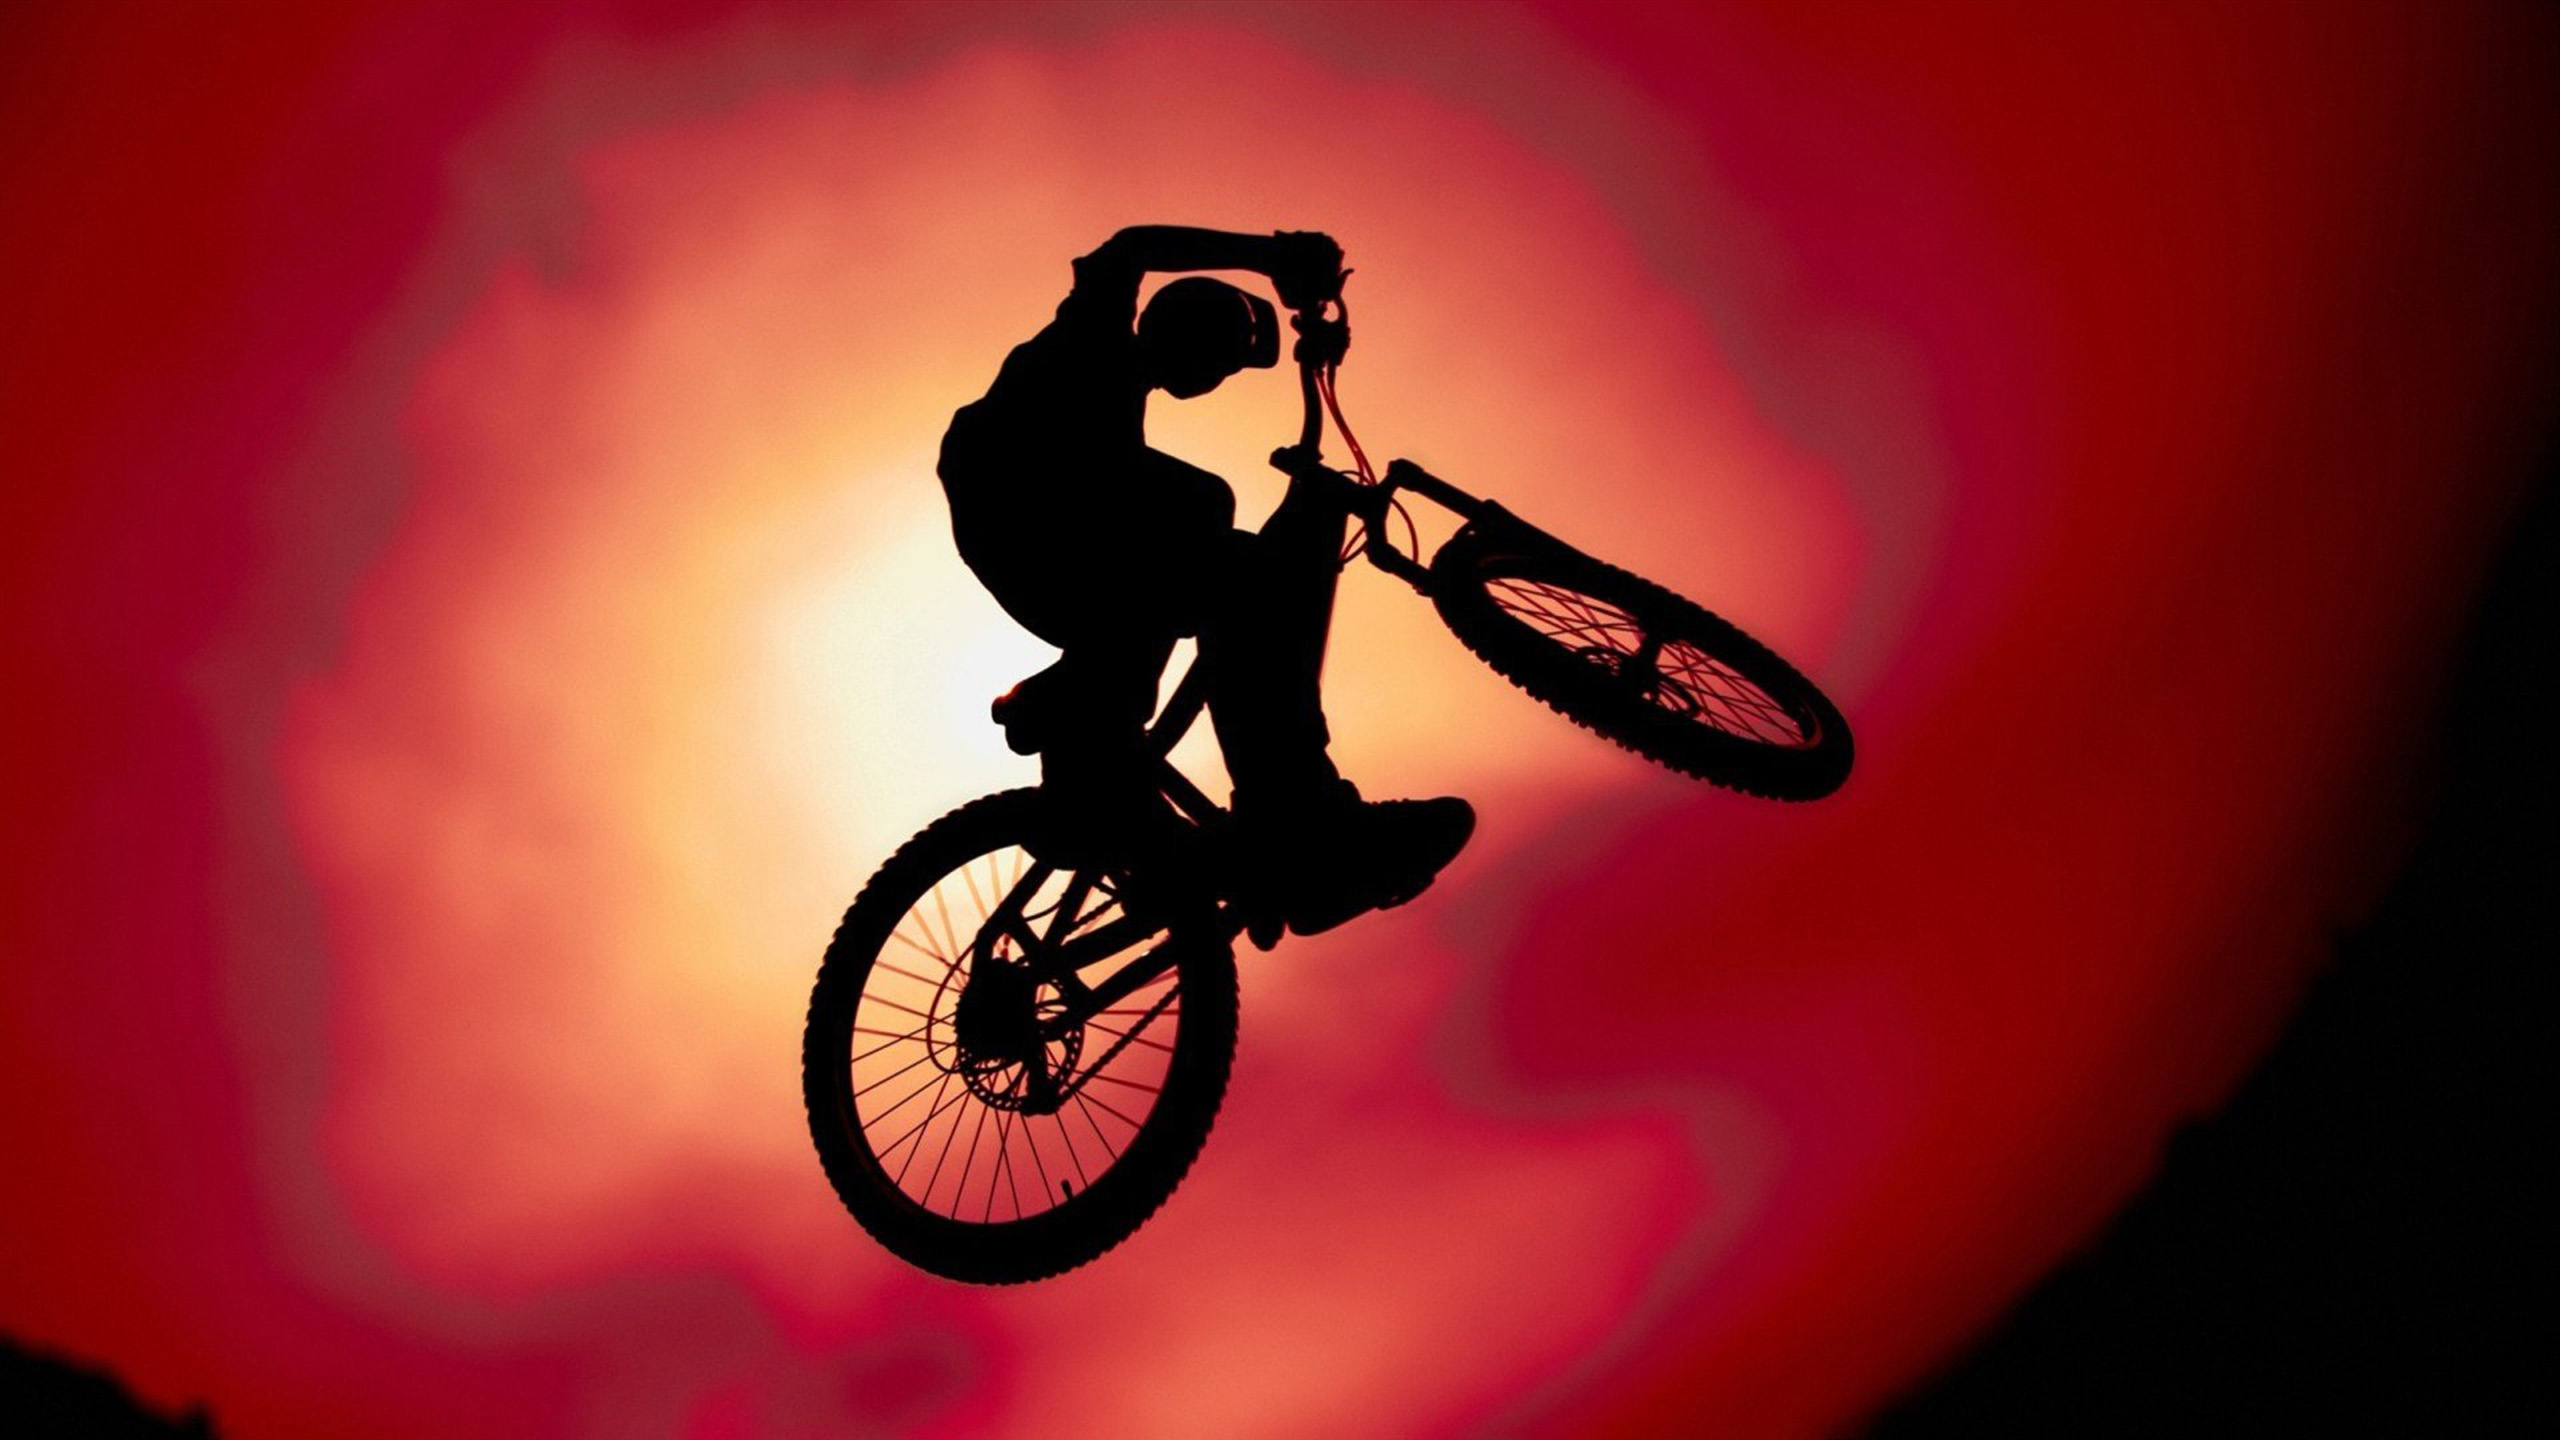 Bike Wheeling Images Wallpapers